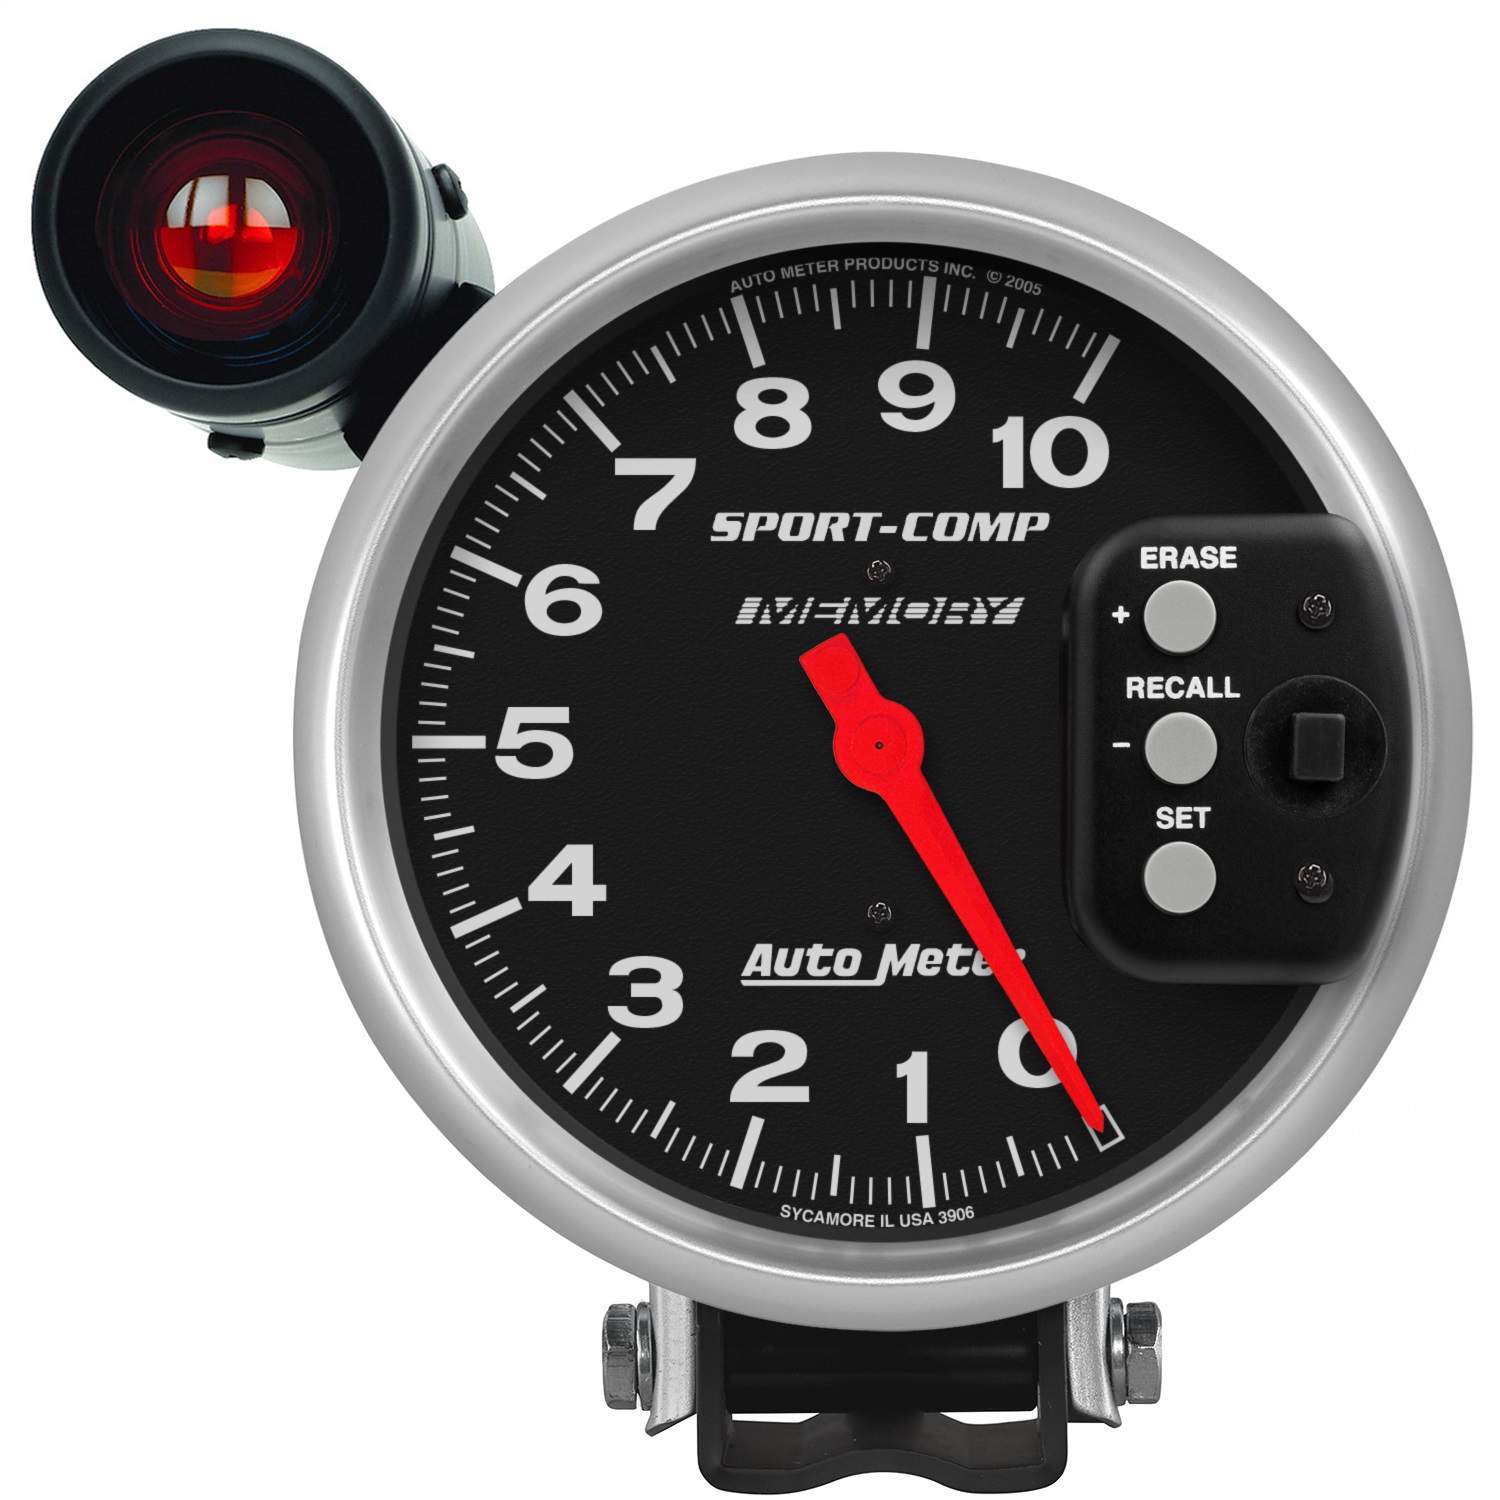 AutoMeter 3906 Sport-Comp Shift-Lite Memory Tachometer